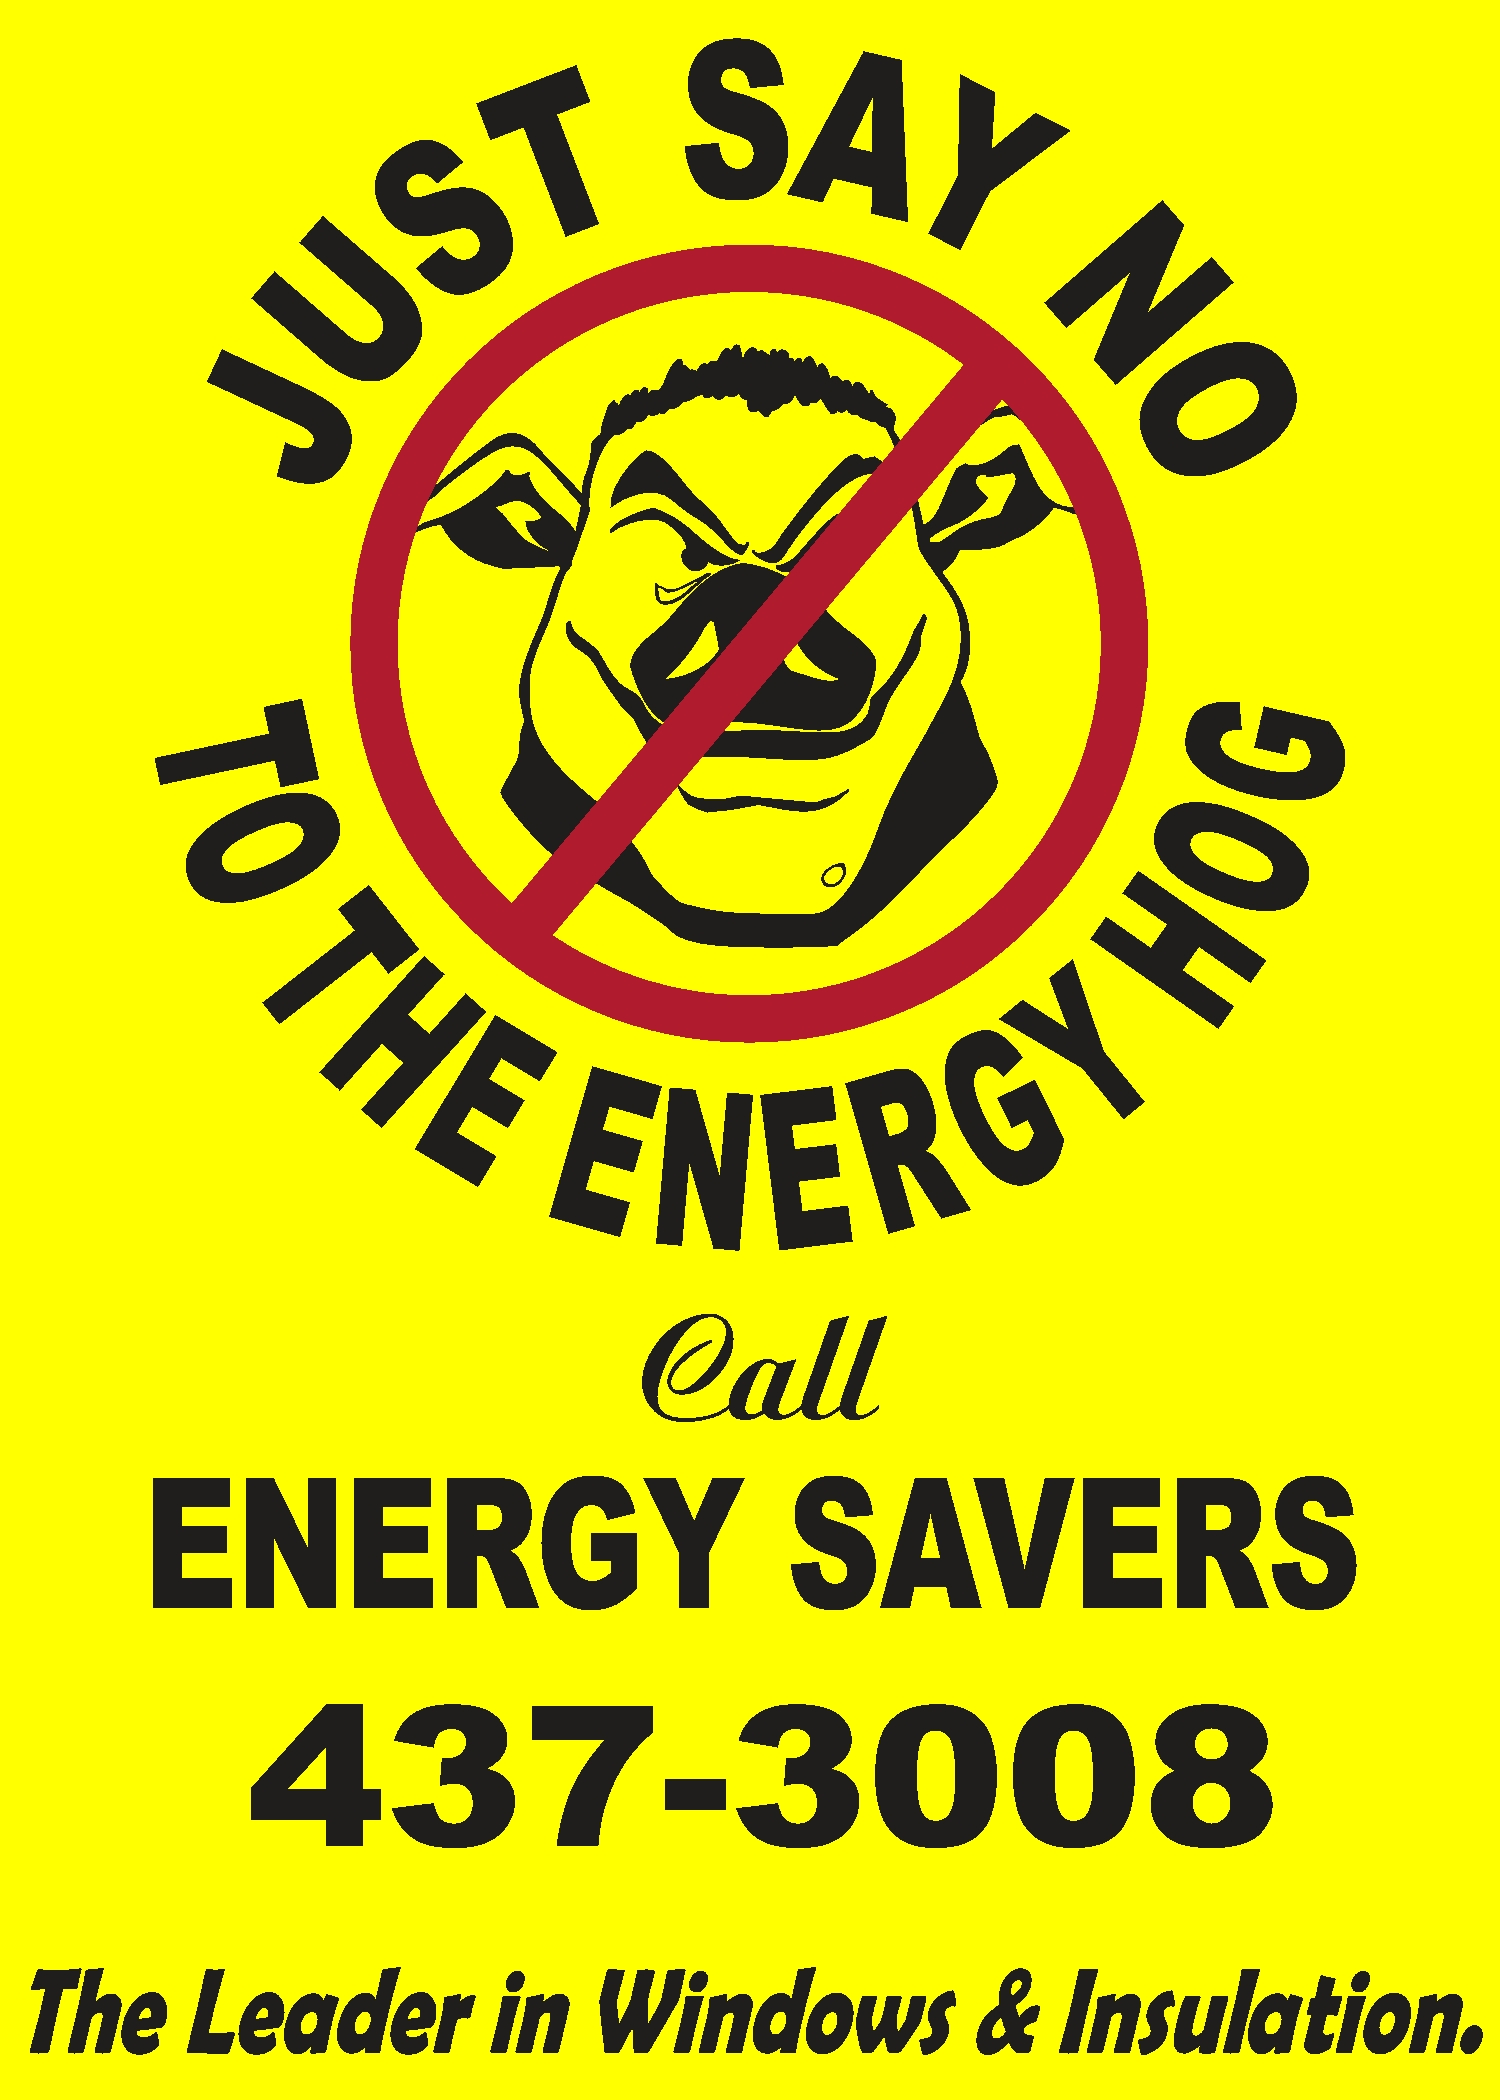 Energy Savers, Inc. Logo